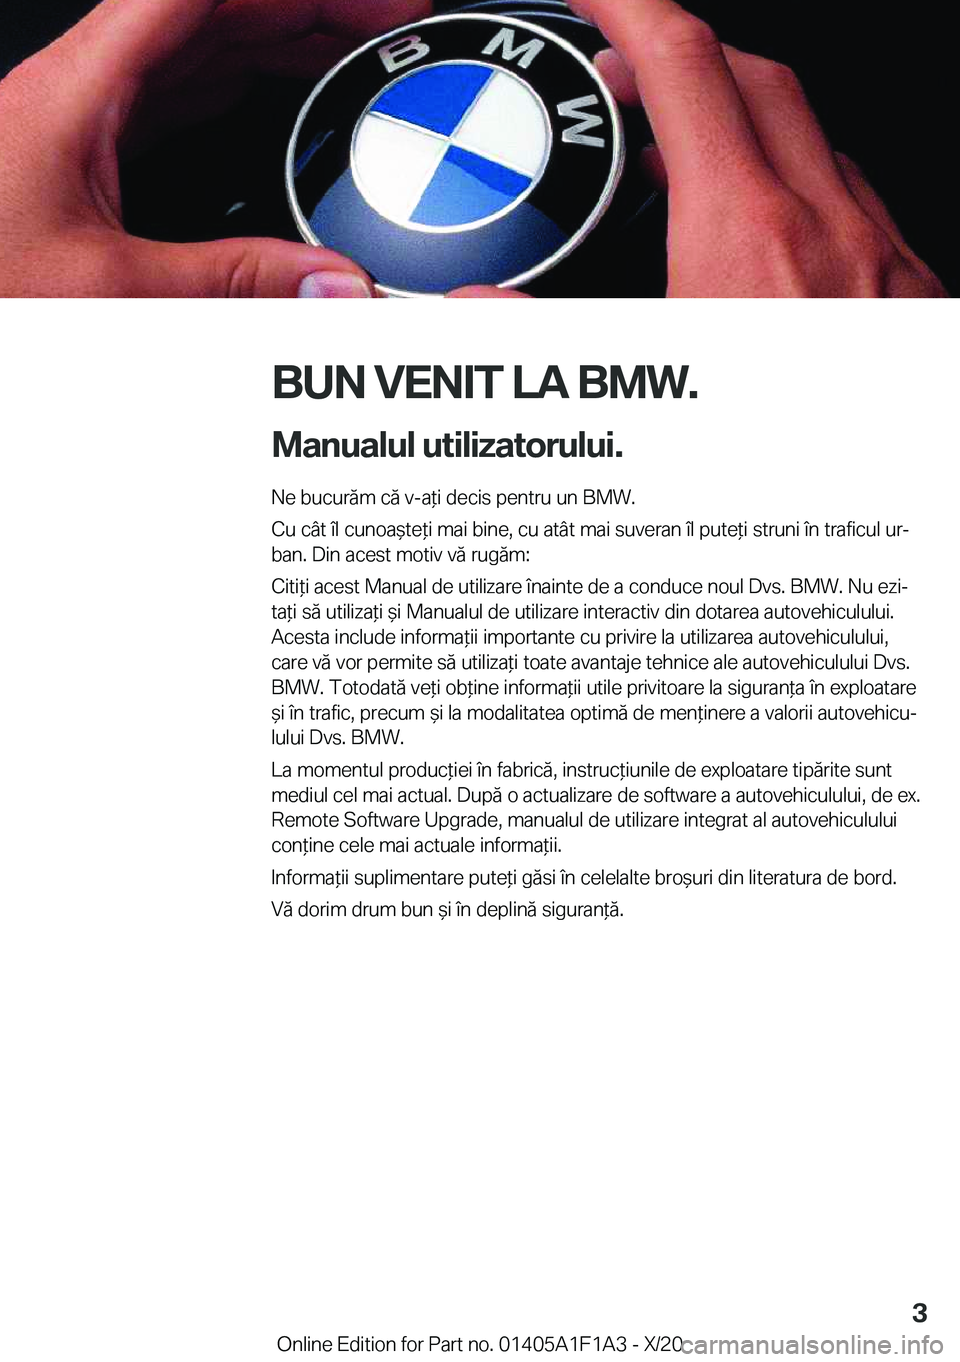 BMW M5 2021  Ghiduri De Utilizare (in Romanian) �B�U�N��V�E�N�I�T��L�A��B�M�W�.�M�a�n�u�a�l�u�l��u�t�i�l�i�z�a�t�o�r�u�l�u�i�.
�N�e��b�u�c�u�r�ă�m��c�ă��v�-�a*�i��d�e�c�i�s��p�e�n�t�r�u��u�n��B�M�W�.
�C�u��c�